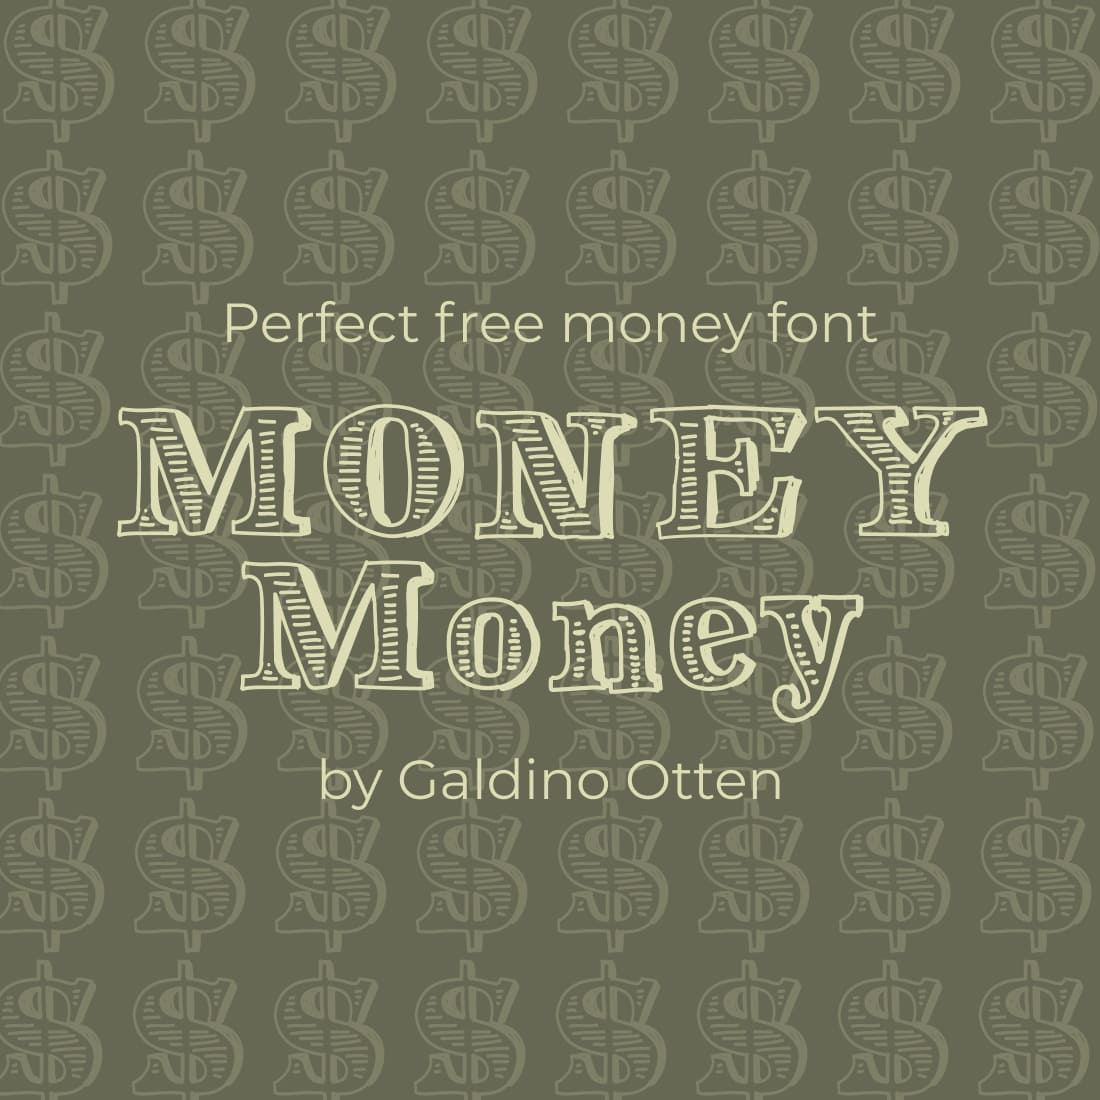 Free money font Main Cover Image by MasterBundles.